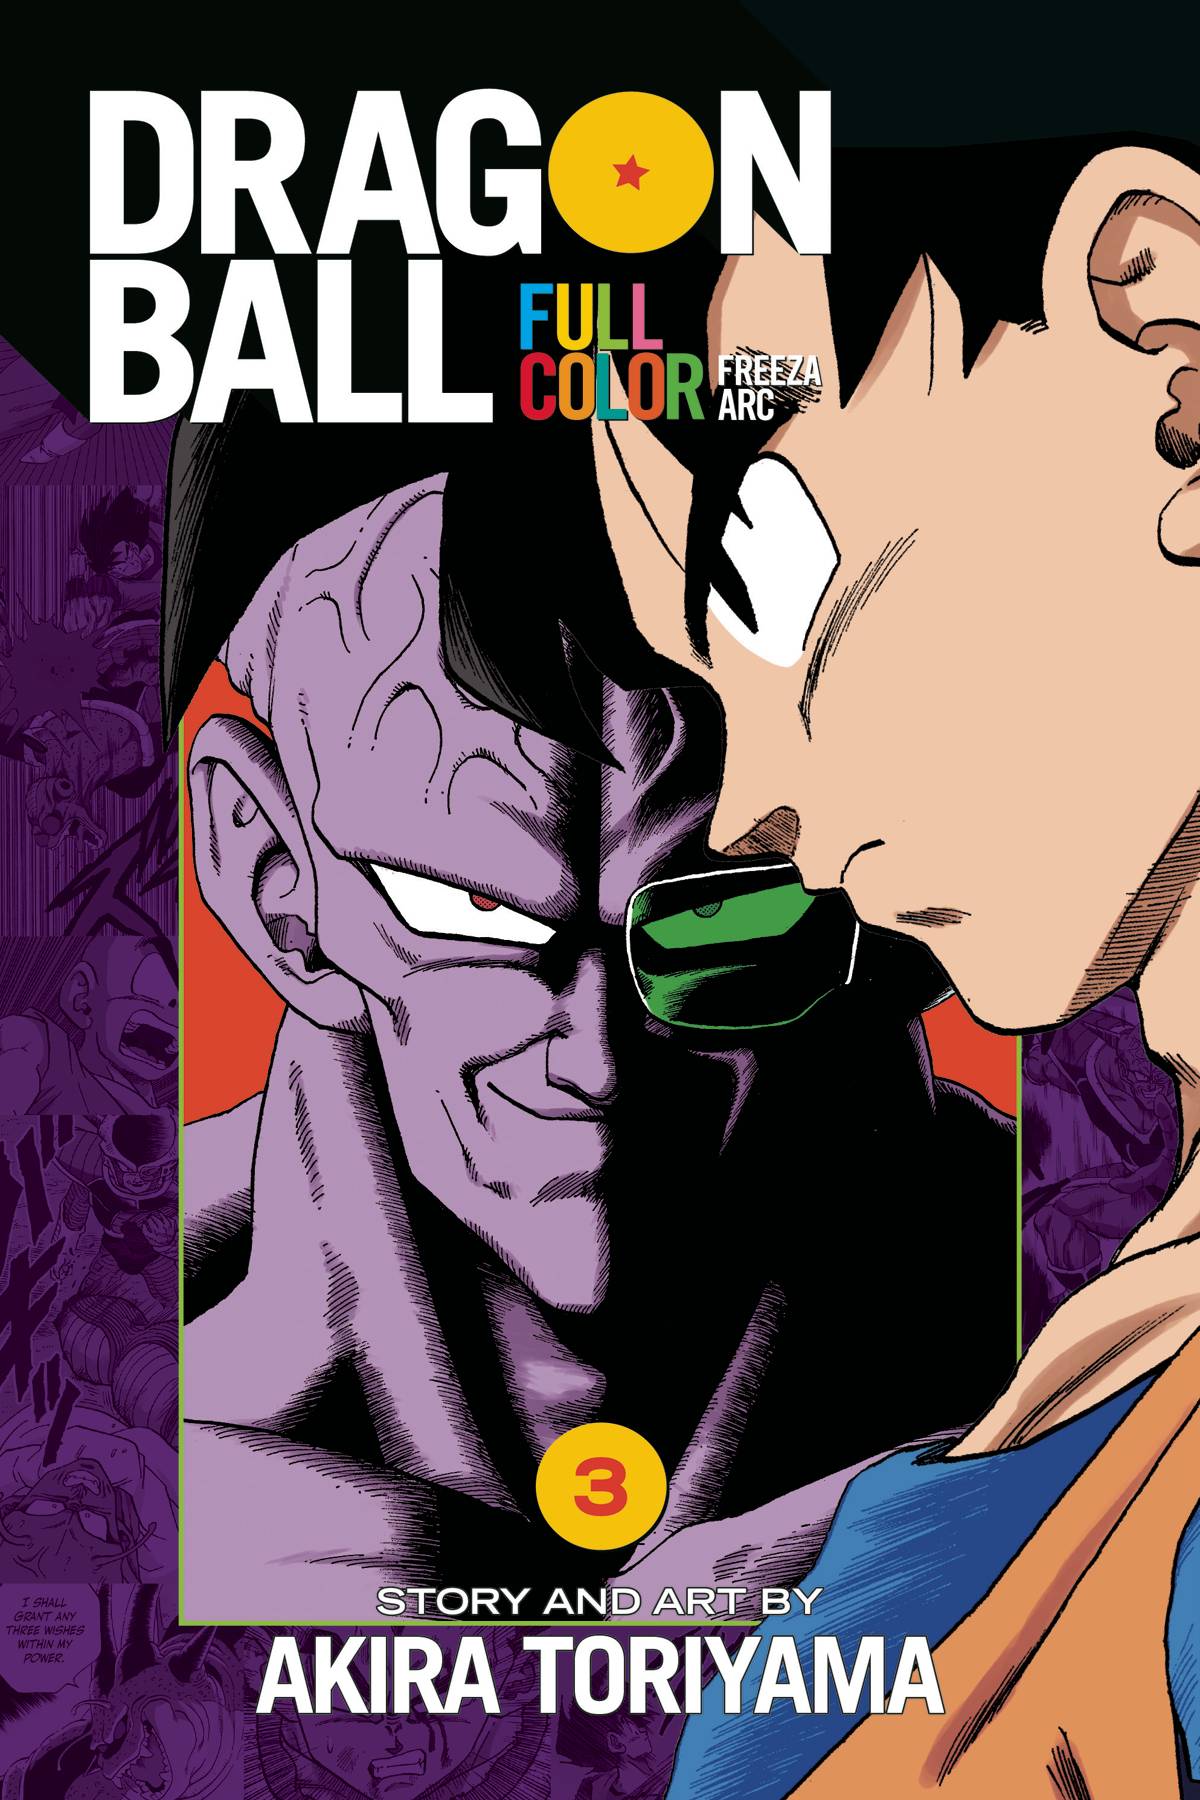 Dragon Ball Full Color Freeza Arc Manga Volume 3